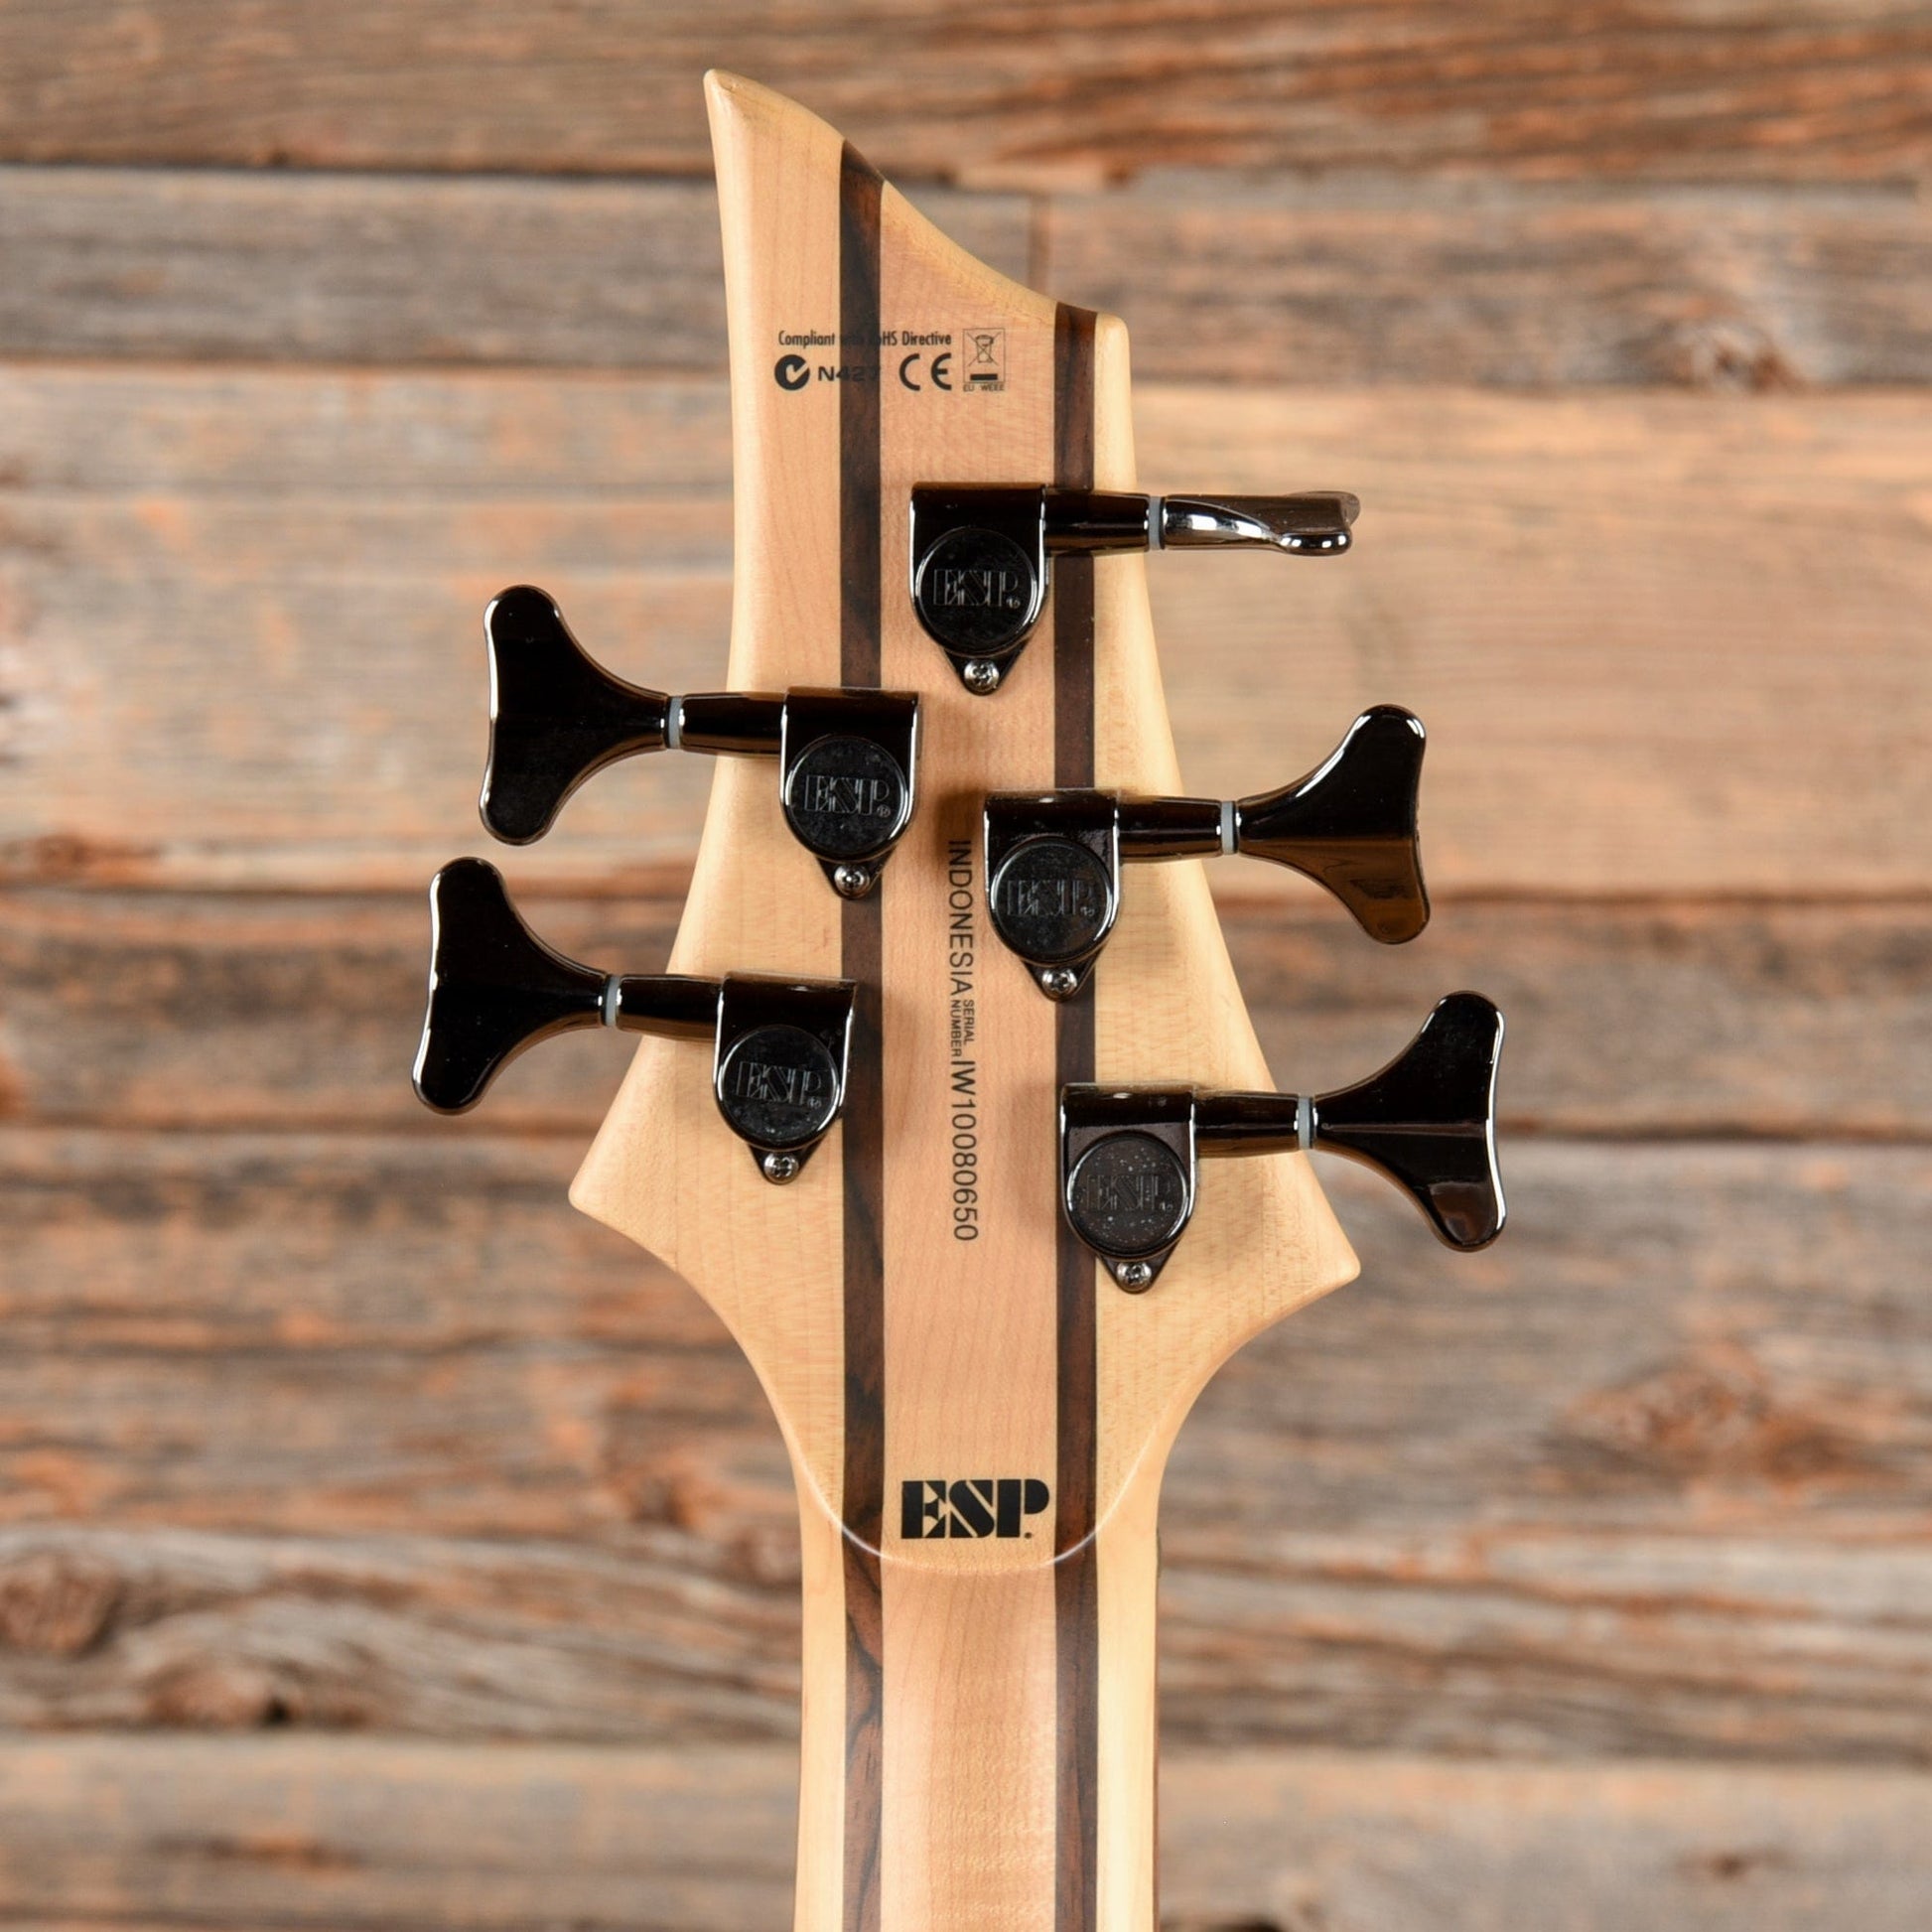 LTD B-205SM Natural Bass Guitars / 5-String or More